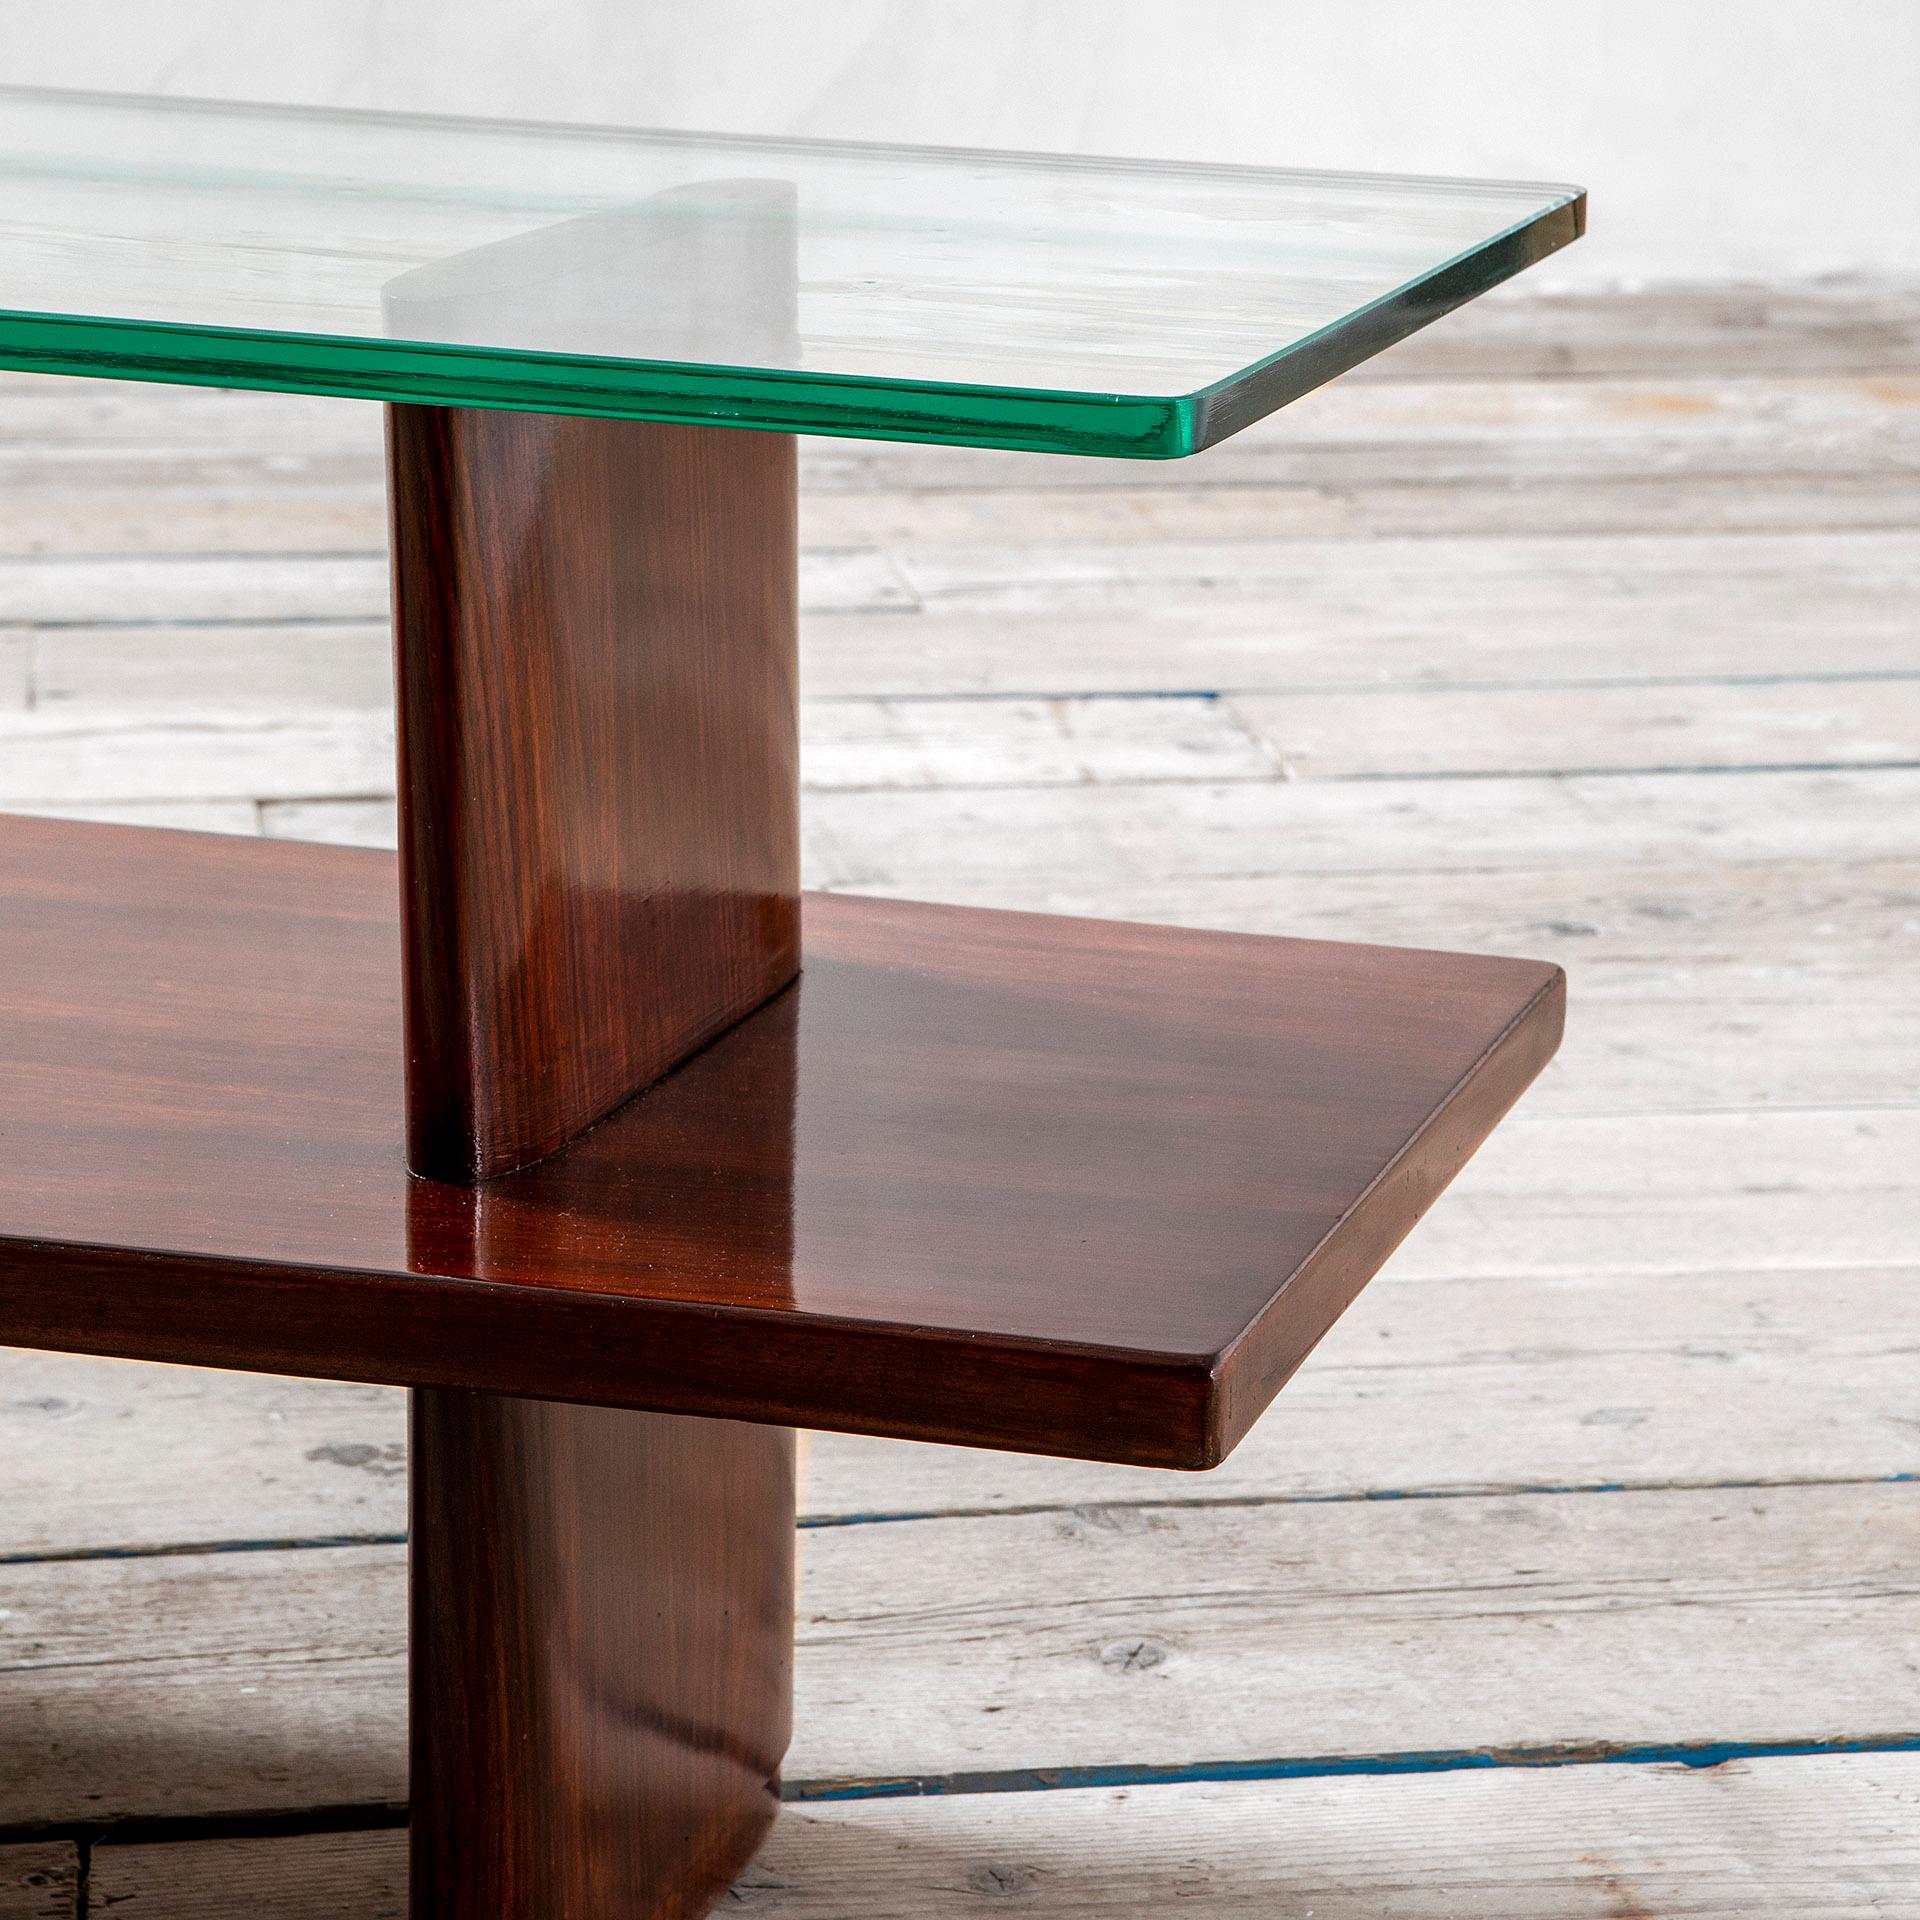 20th Century Osvaldo Borsani Wood and Glass Coffee Table by Arredamenti Varedo In Good Condition For Sale In Turin, Turin